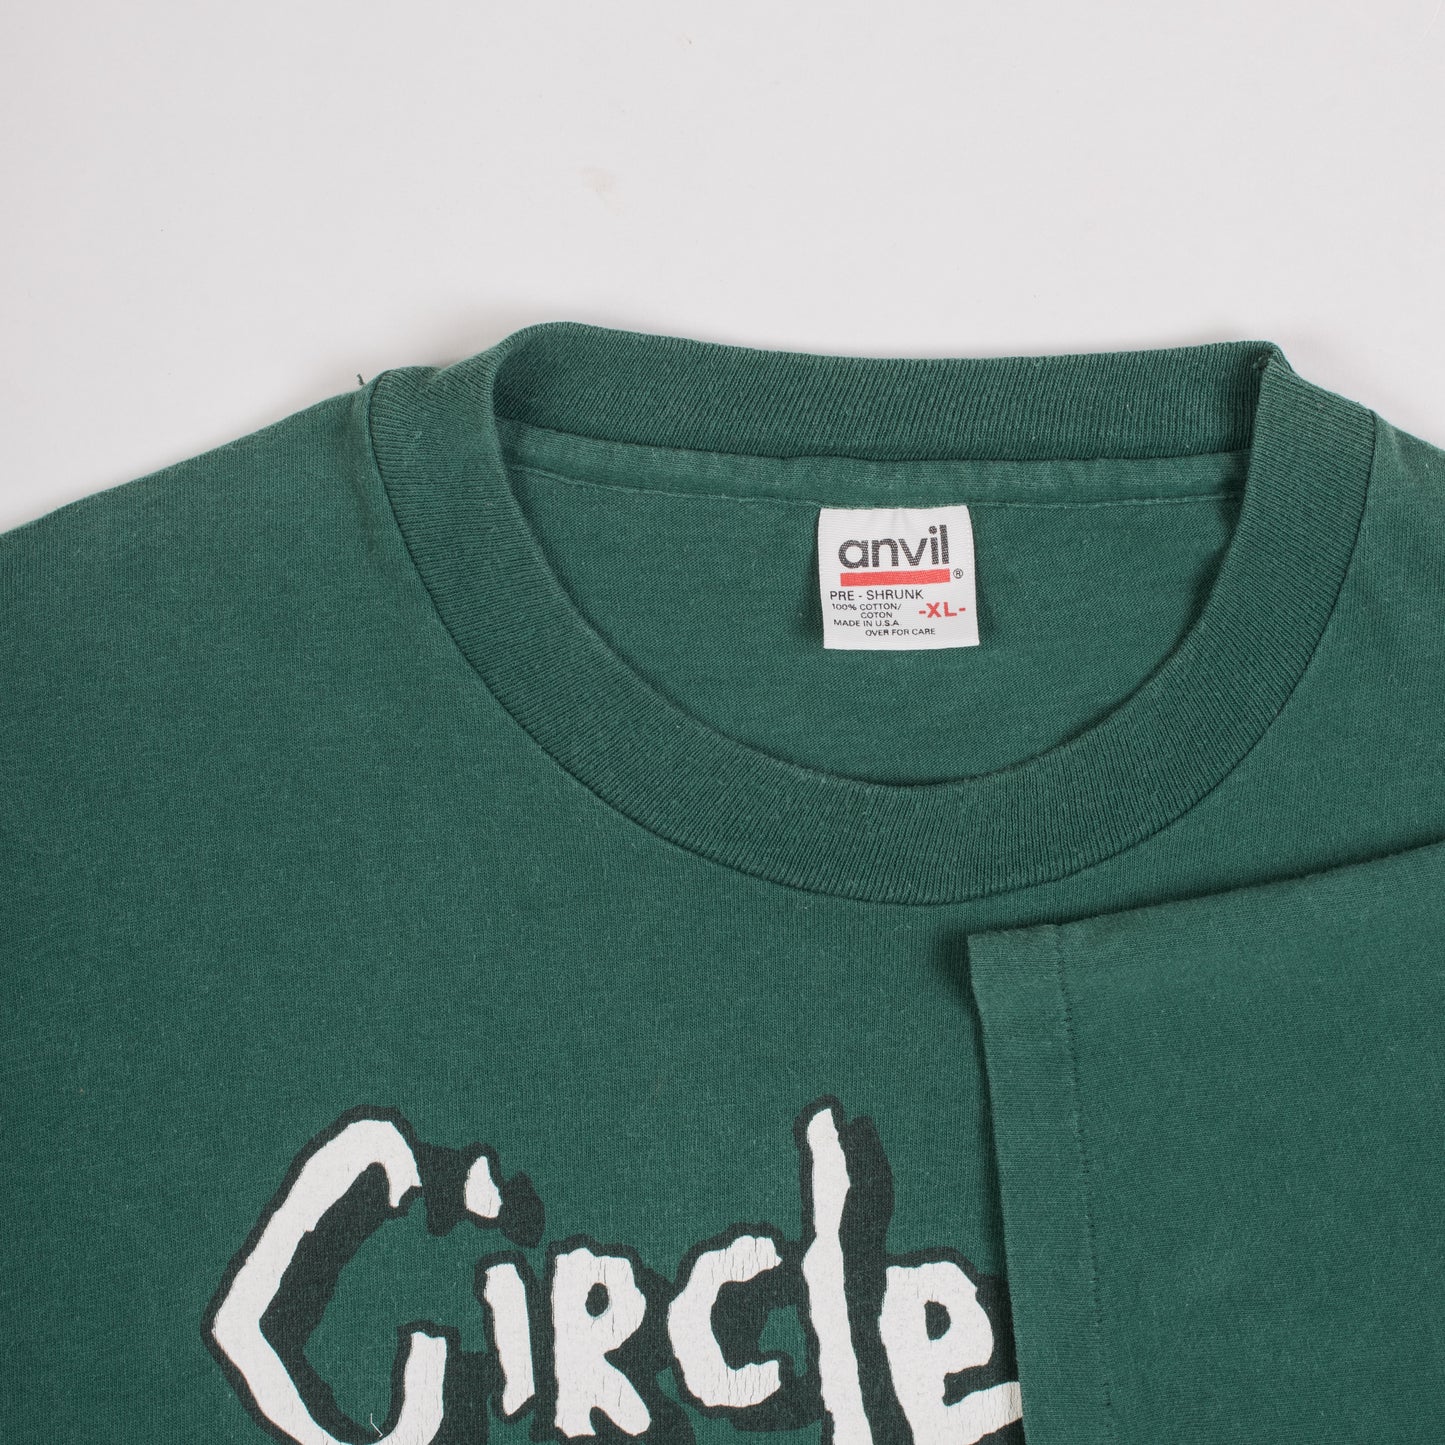 Vintage 1995 Circle Jerks T-Shirt